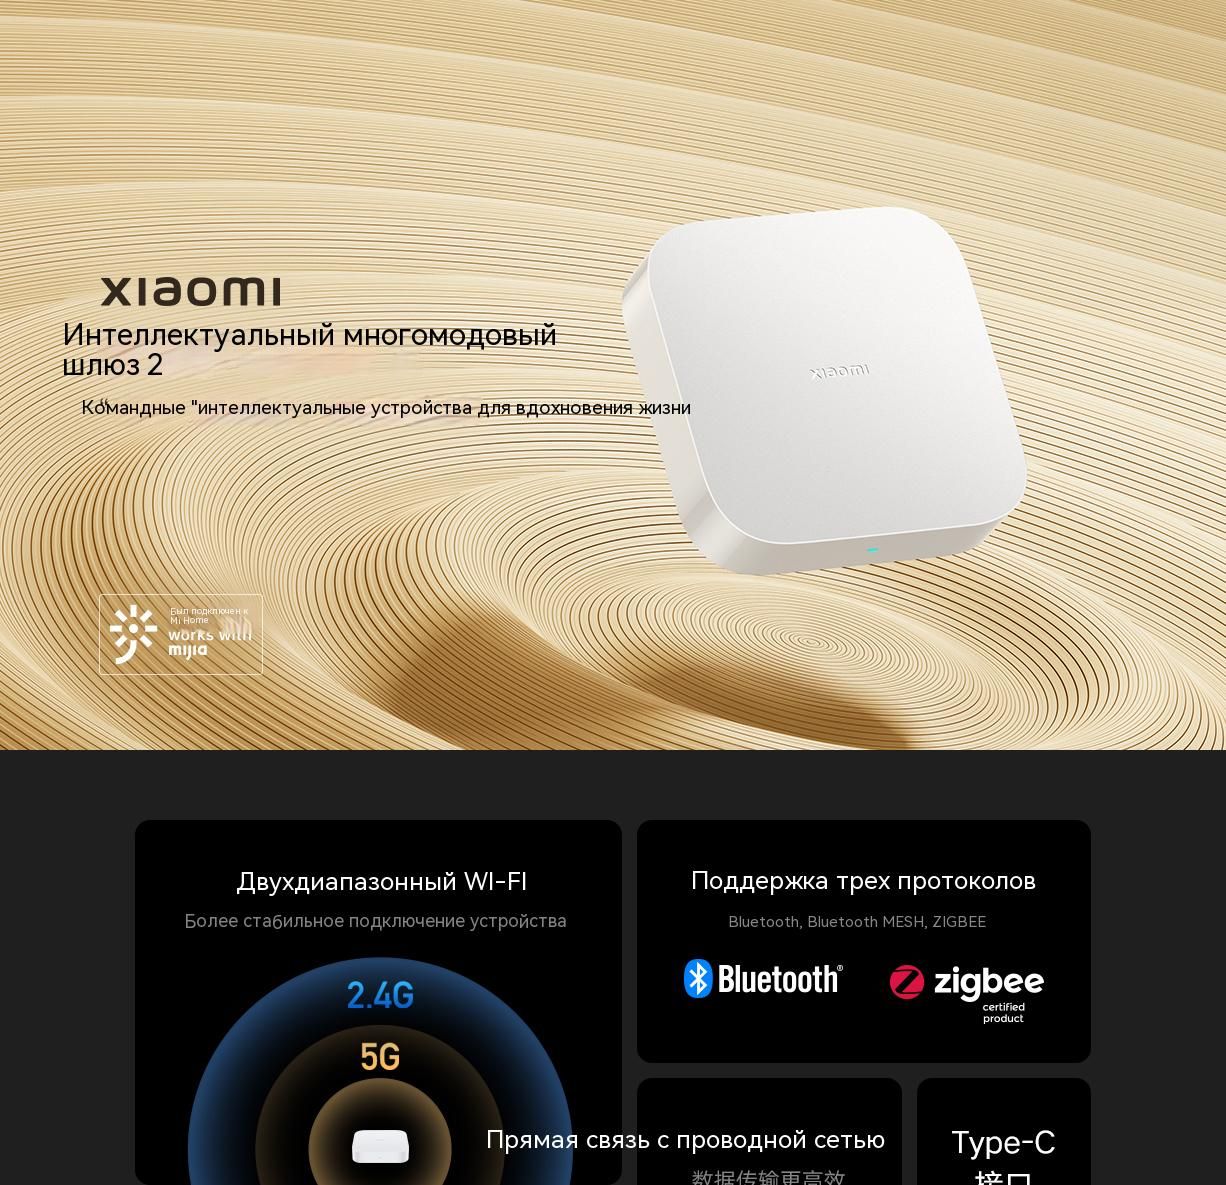 Xiaomi smart home gateway 2 подключение